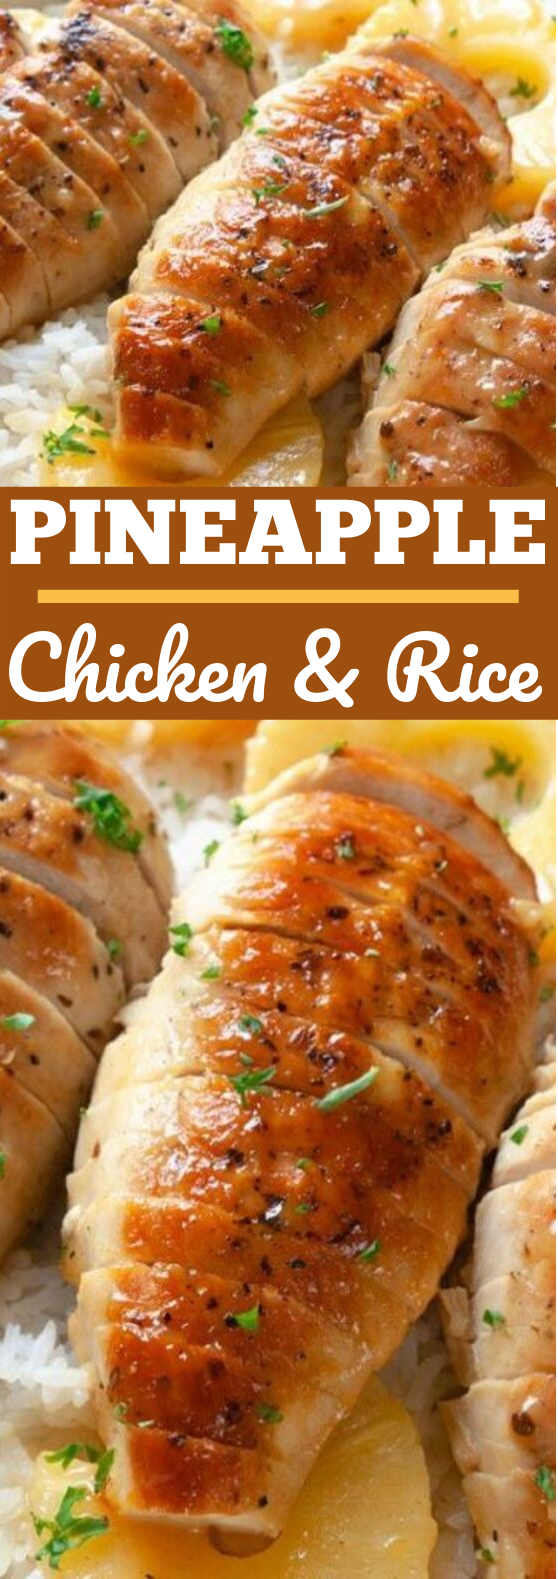 Pineapple Chicken and Rice #dinner #chicken